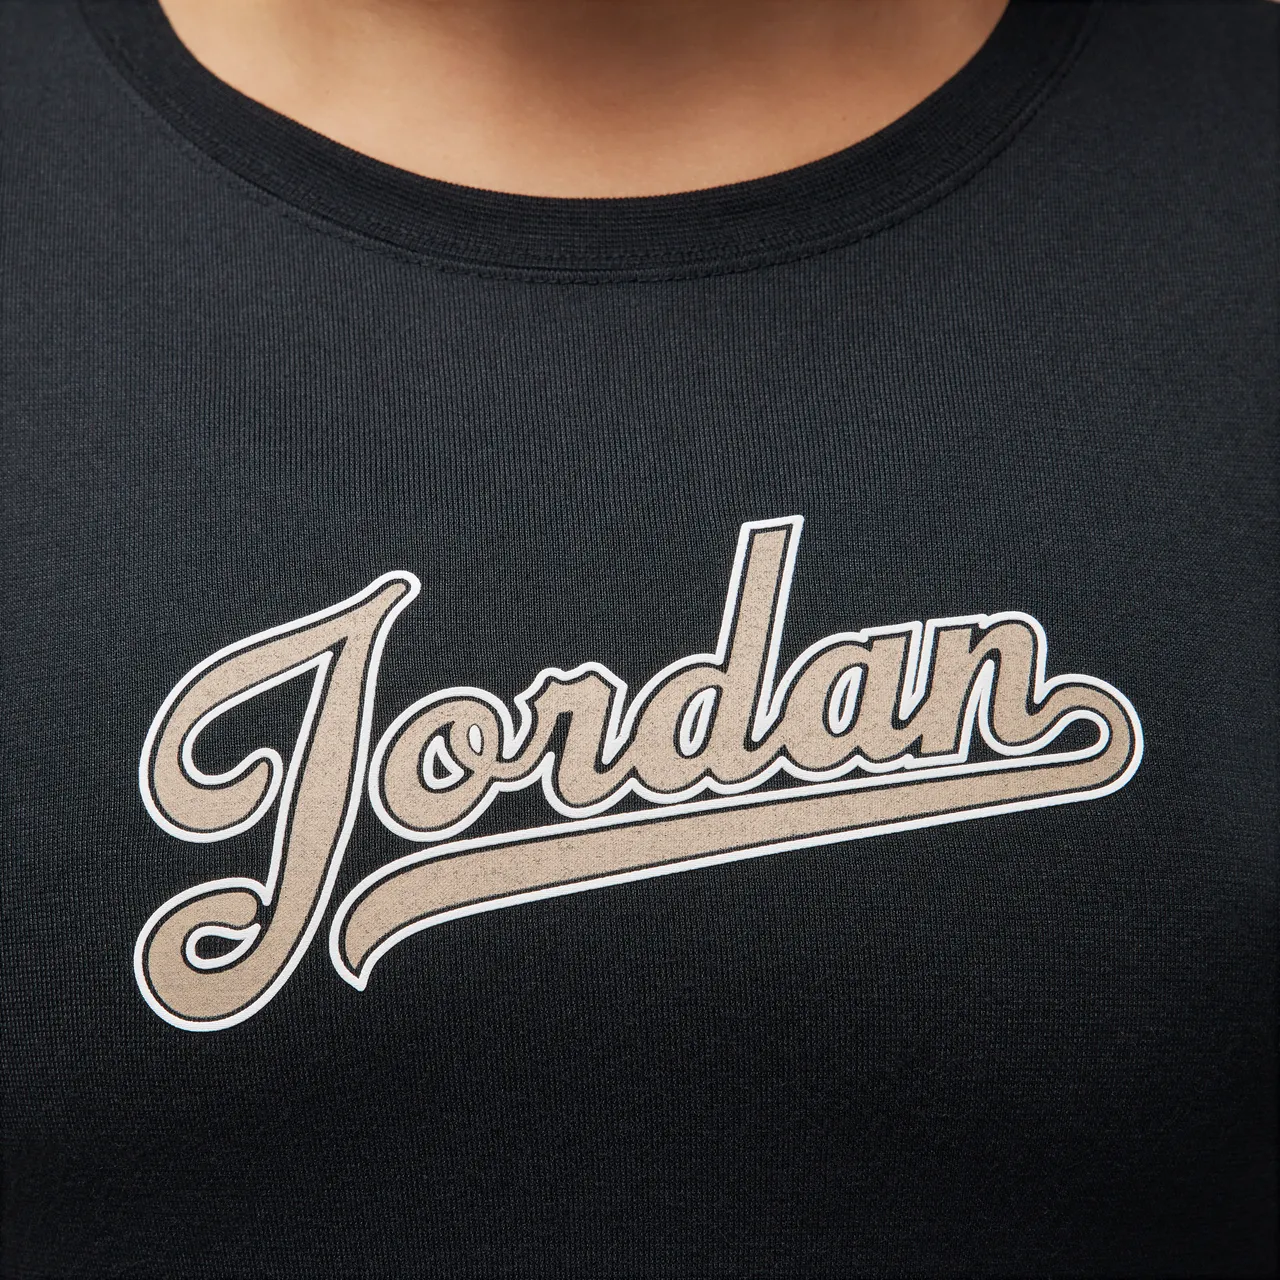 Jordan Women's Slim T-Shirt - Black - Polyester